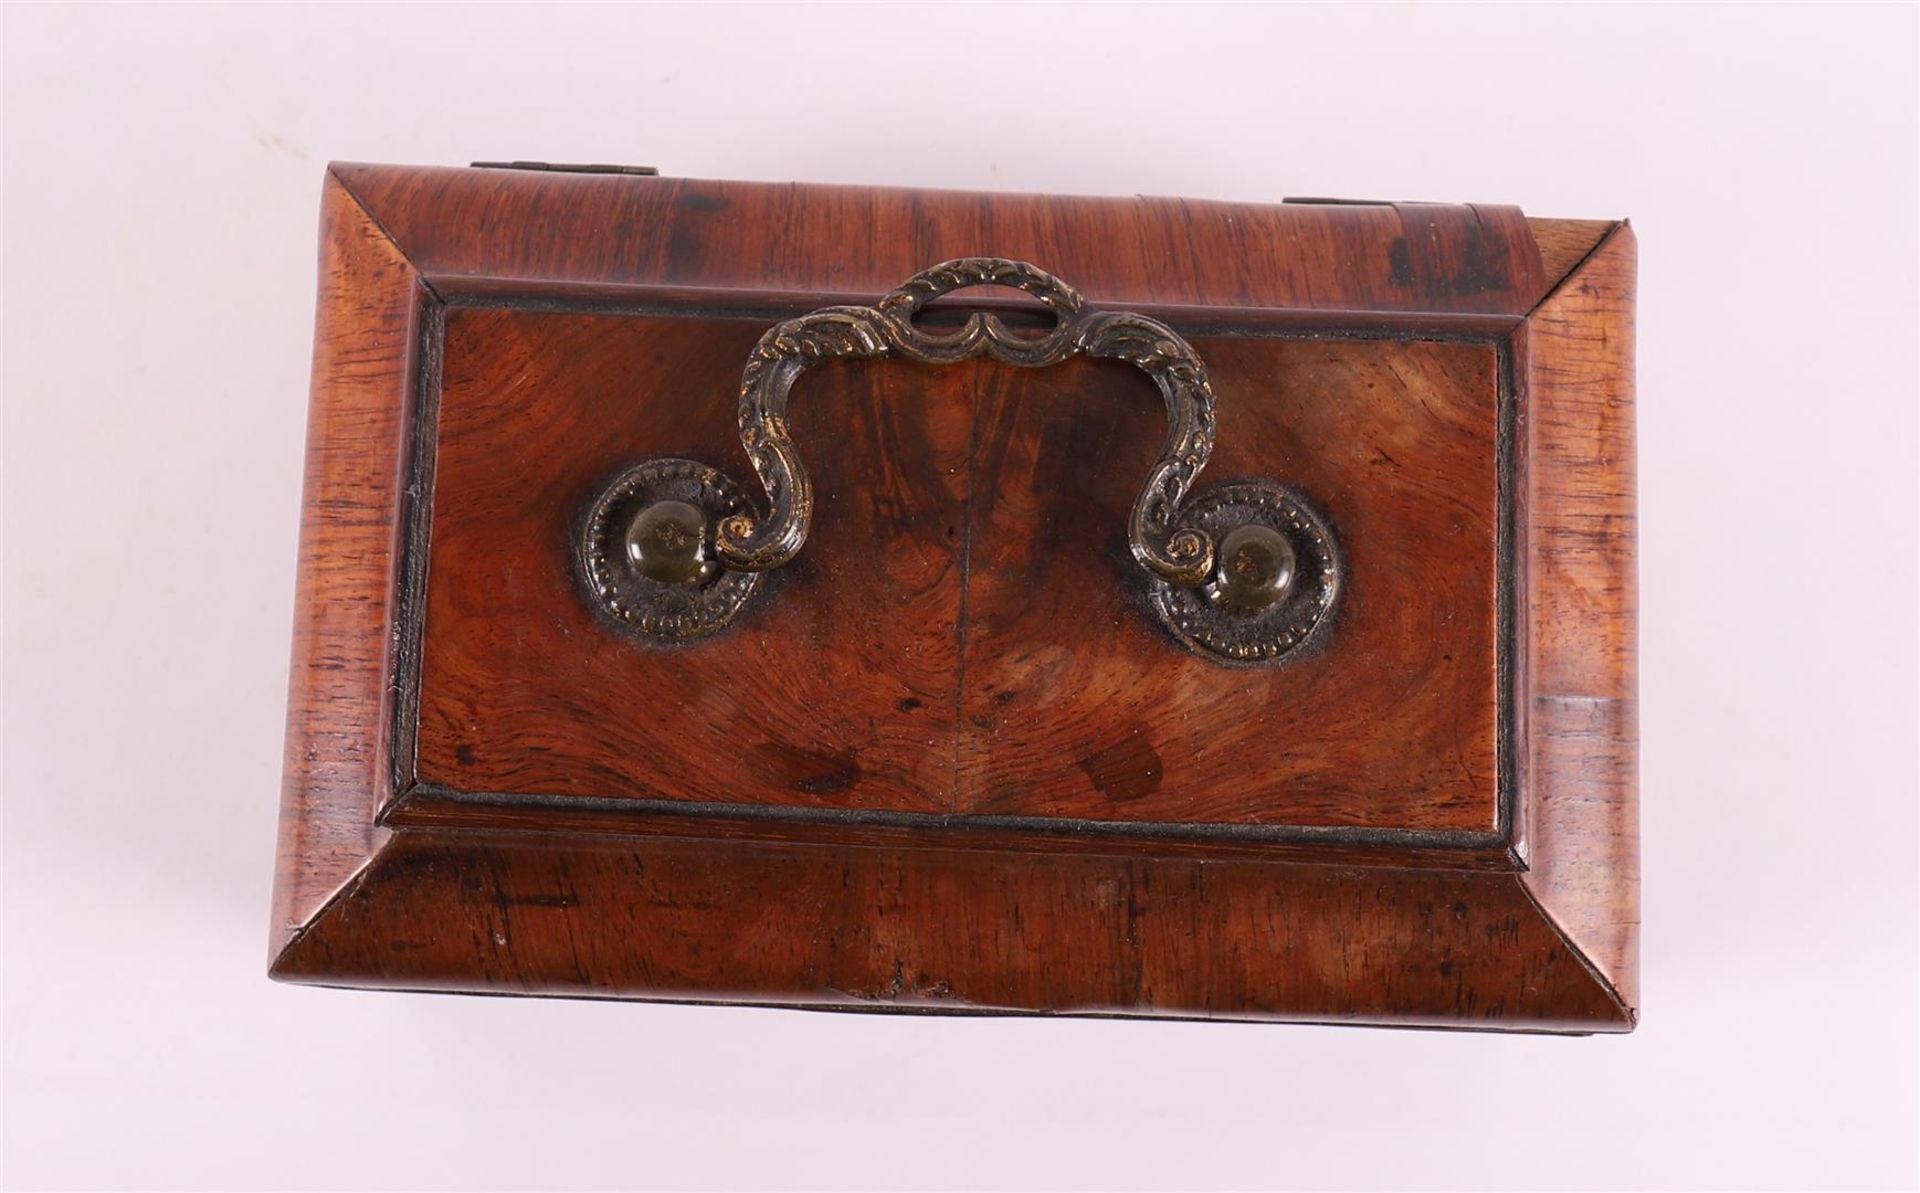 A Dutch rosewood tea box, mid 18th century, h 14 x l 20 x w 12 cm. - Image 6 of 7